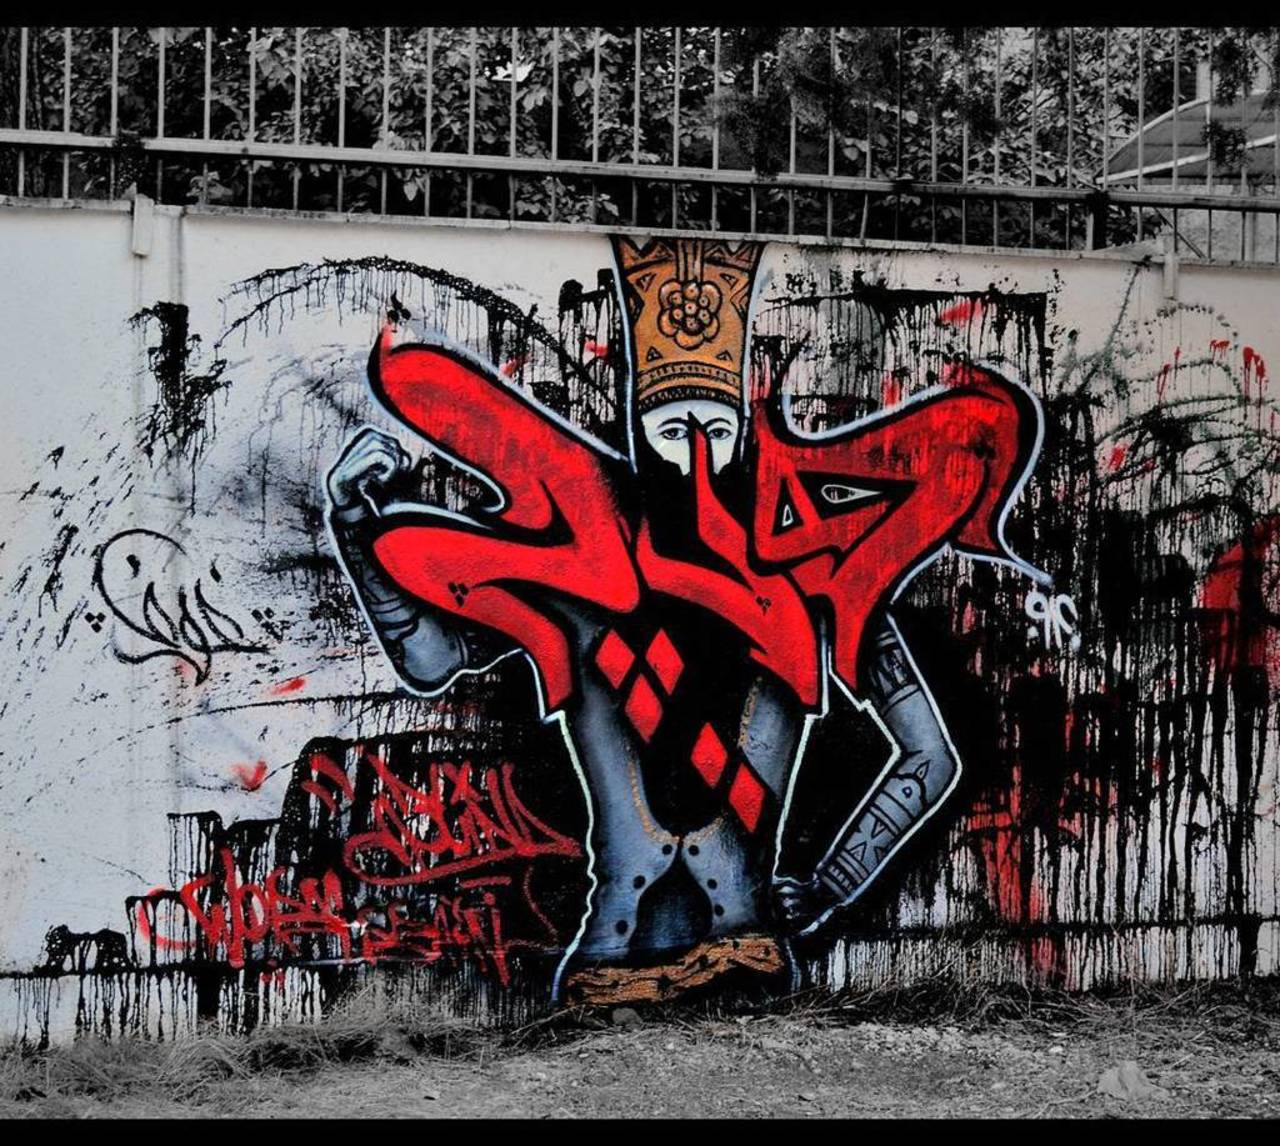 RT @artpushr: via #mrwormbrain "http://ift.tt/1VnEtR1" #graffiti #streetart http://t.co/o5BmJORJFh